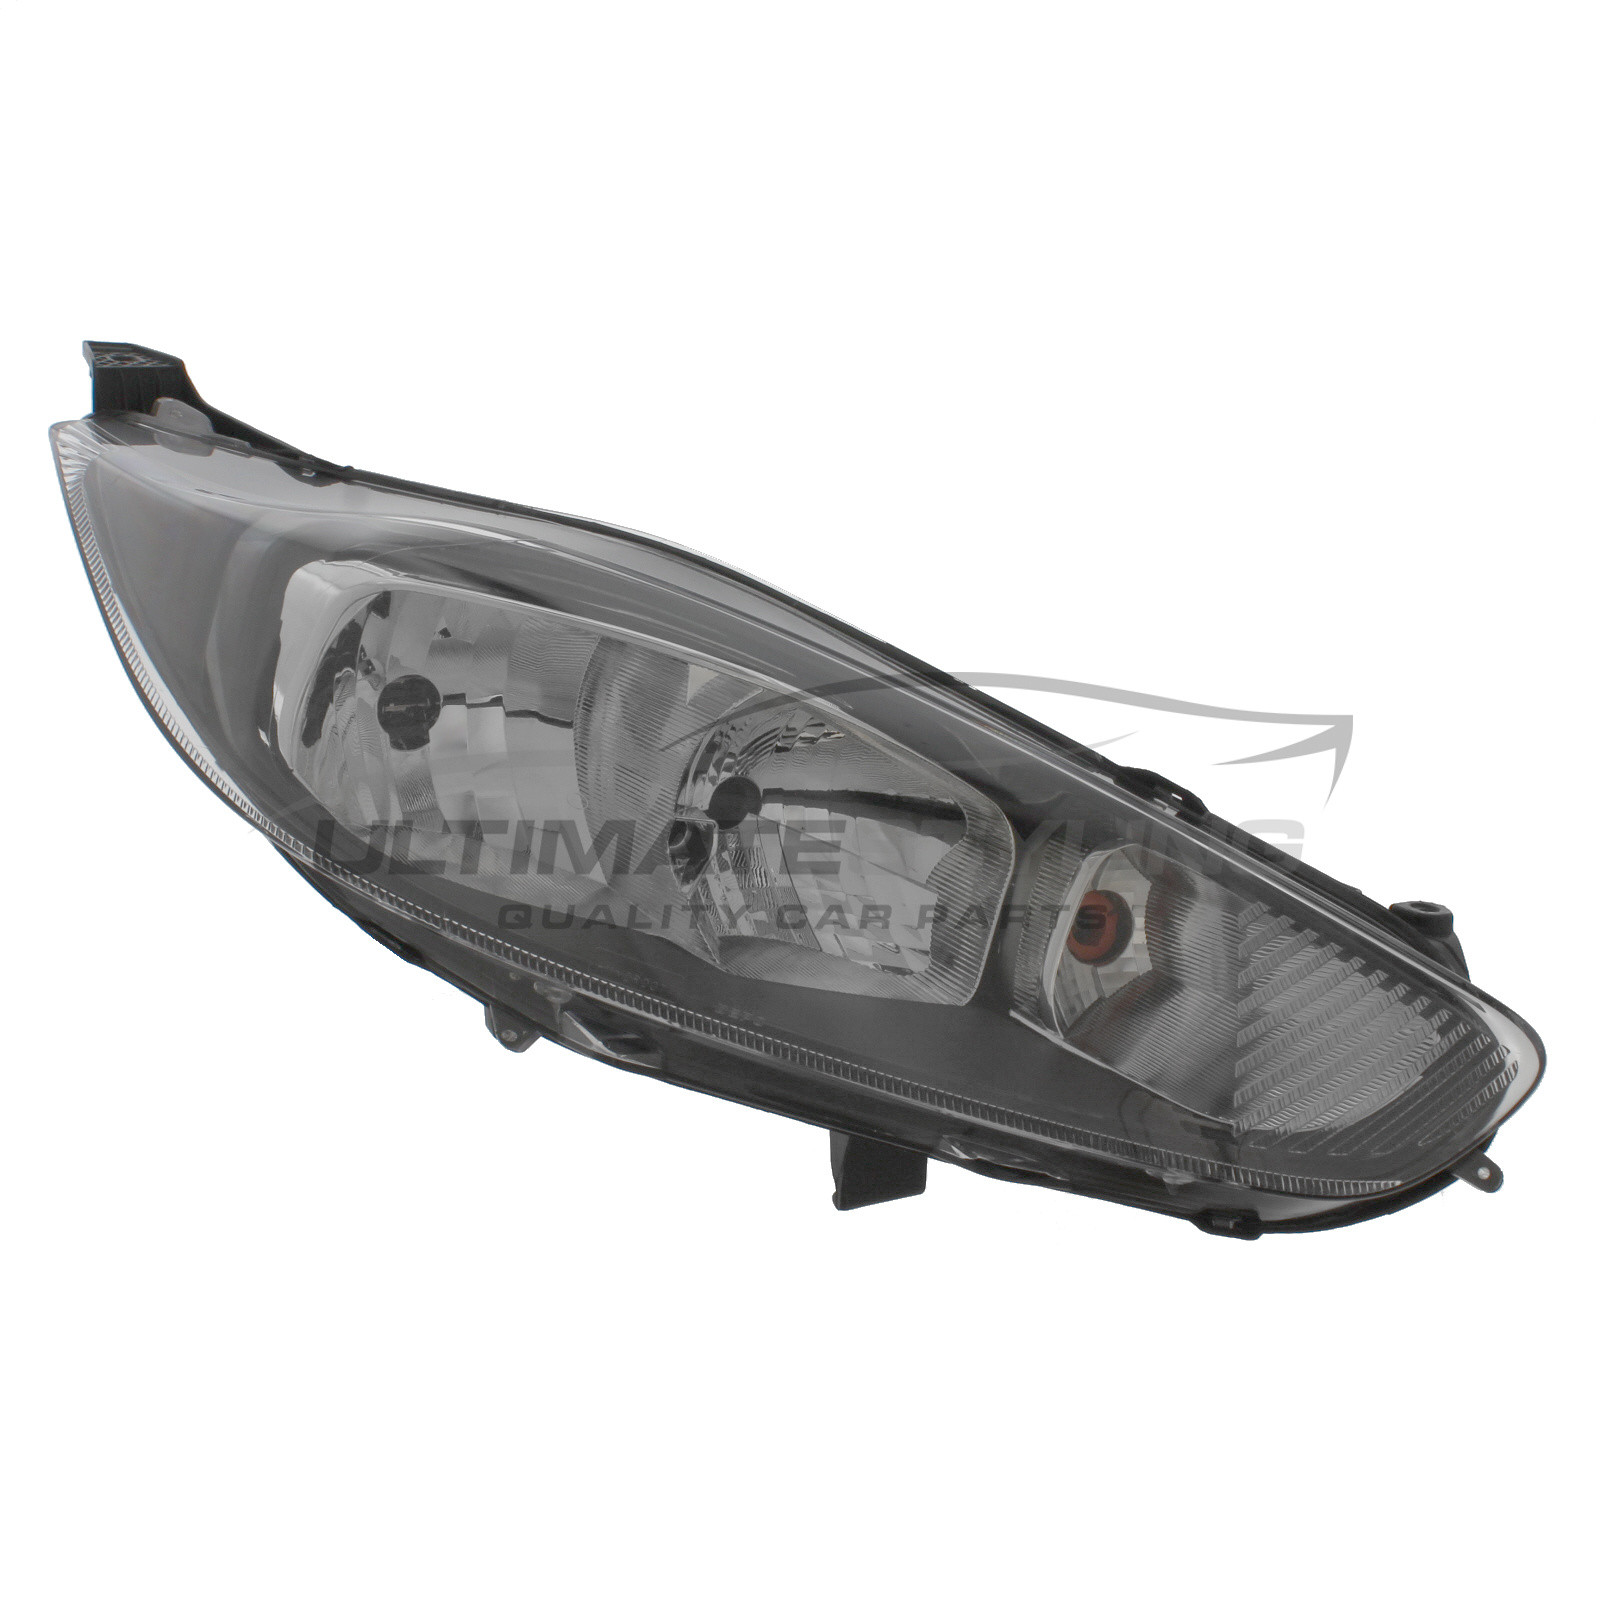 Headlight / Headlamp for Ford Fiesta